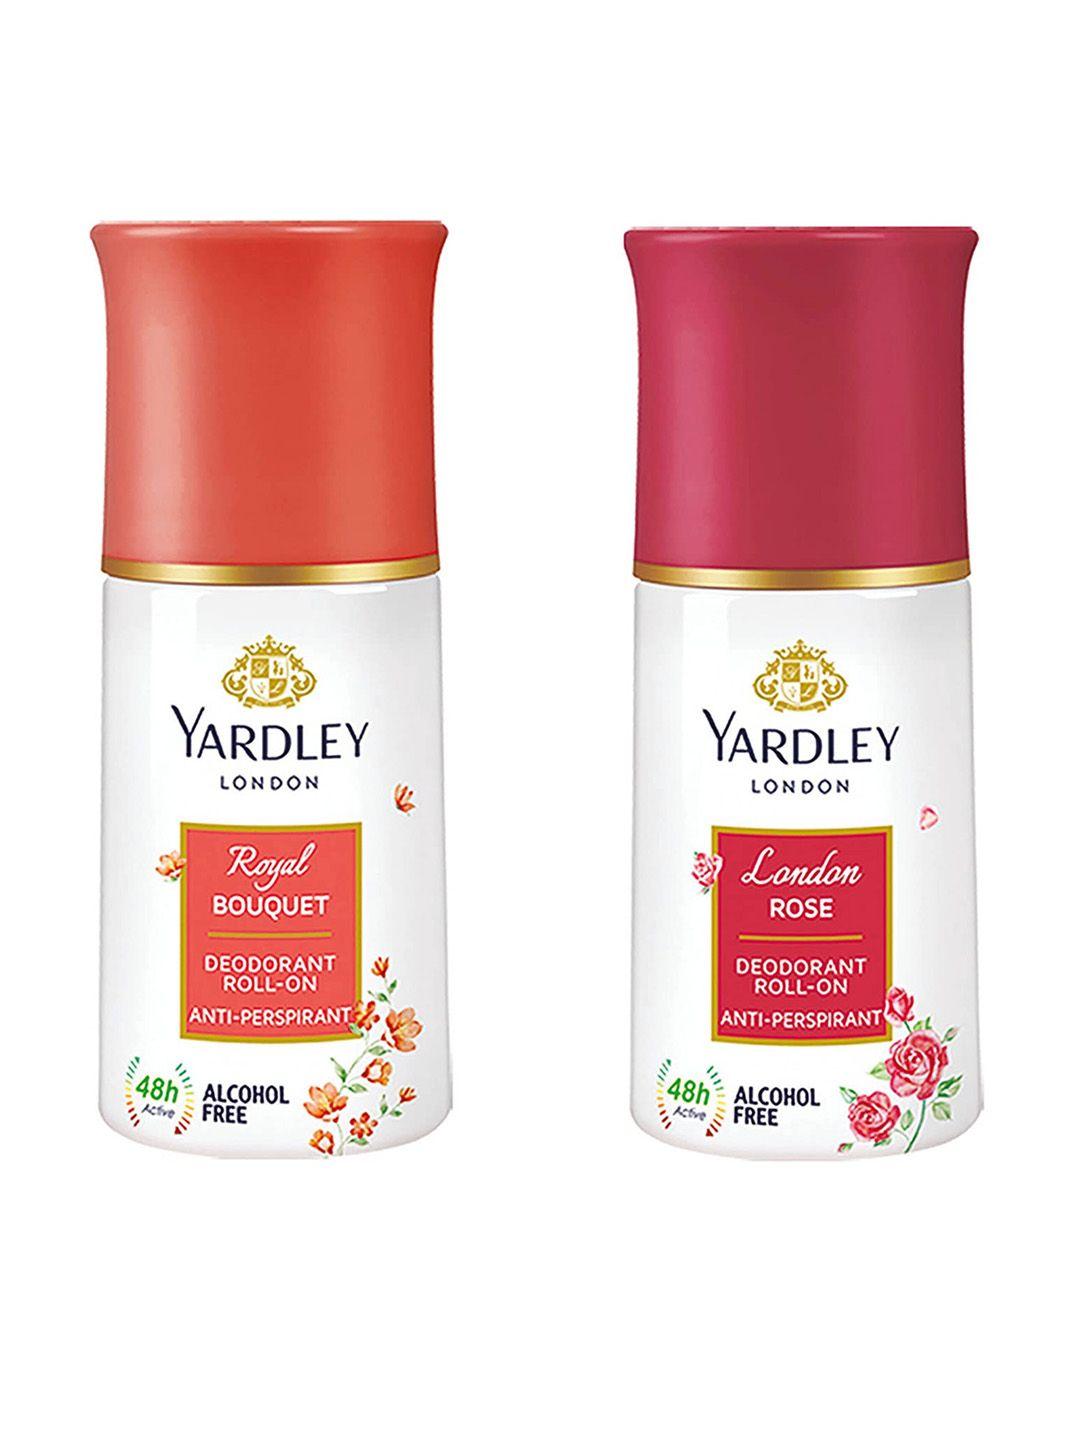 yardley london set of 2 anti-perspirant & alcohol-free deodorant roll-ons - royal bouquet - london rose - 50 ml each